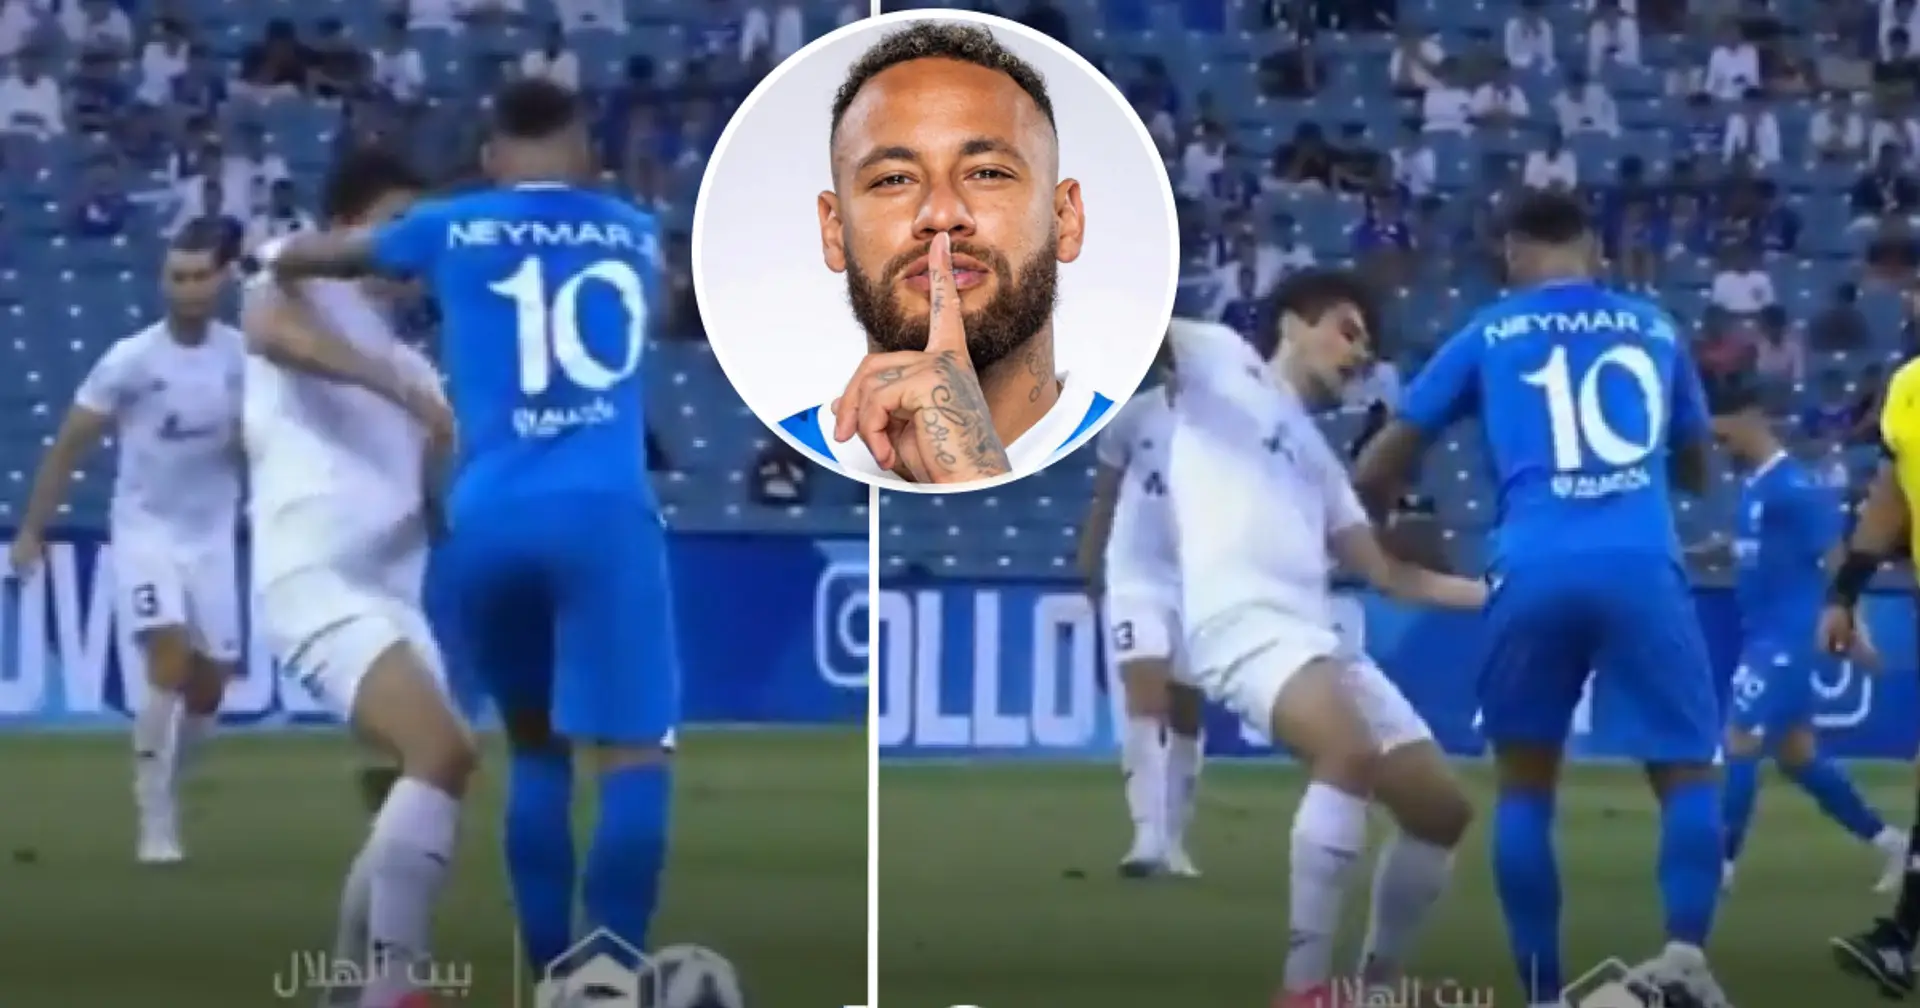 Neymar bad behaviour in Saudi League caught on camera – pushes player down and kicks ball at him